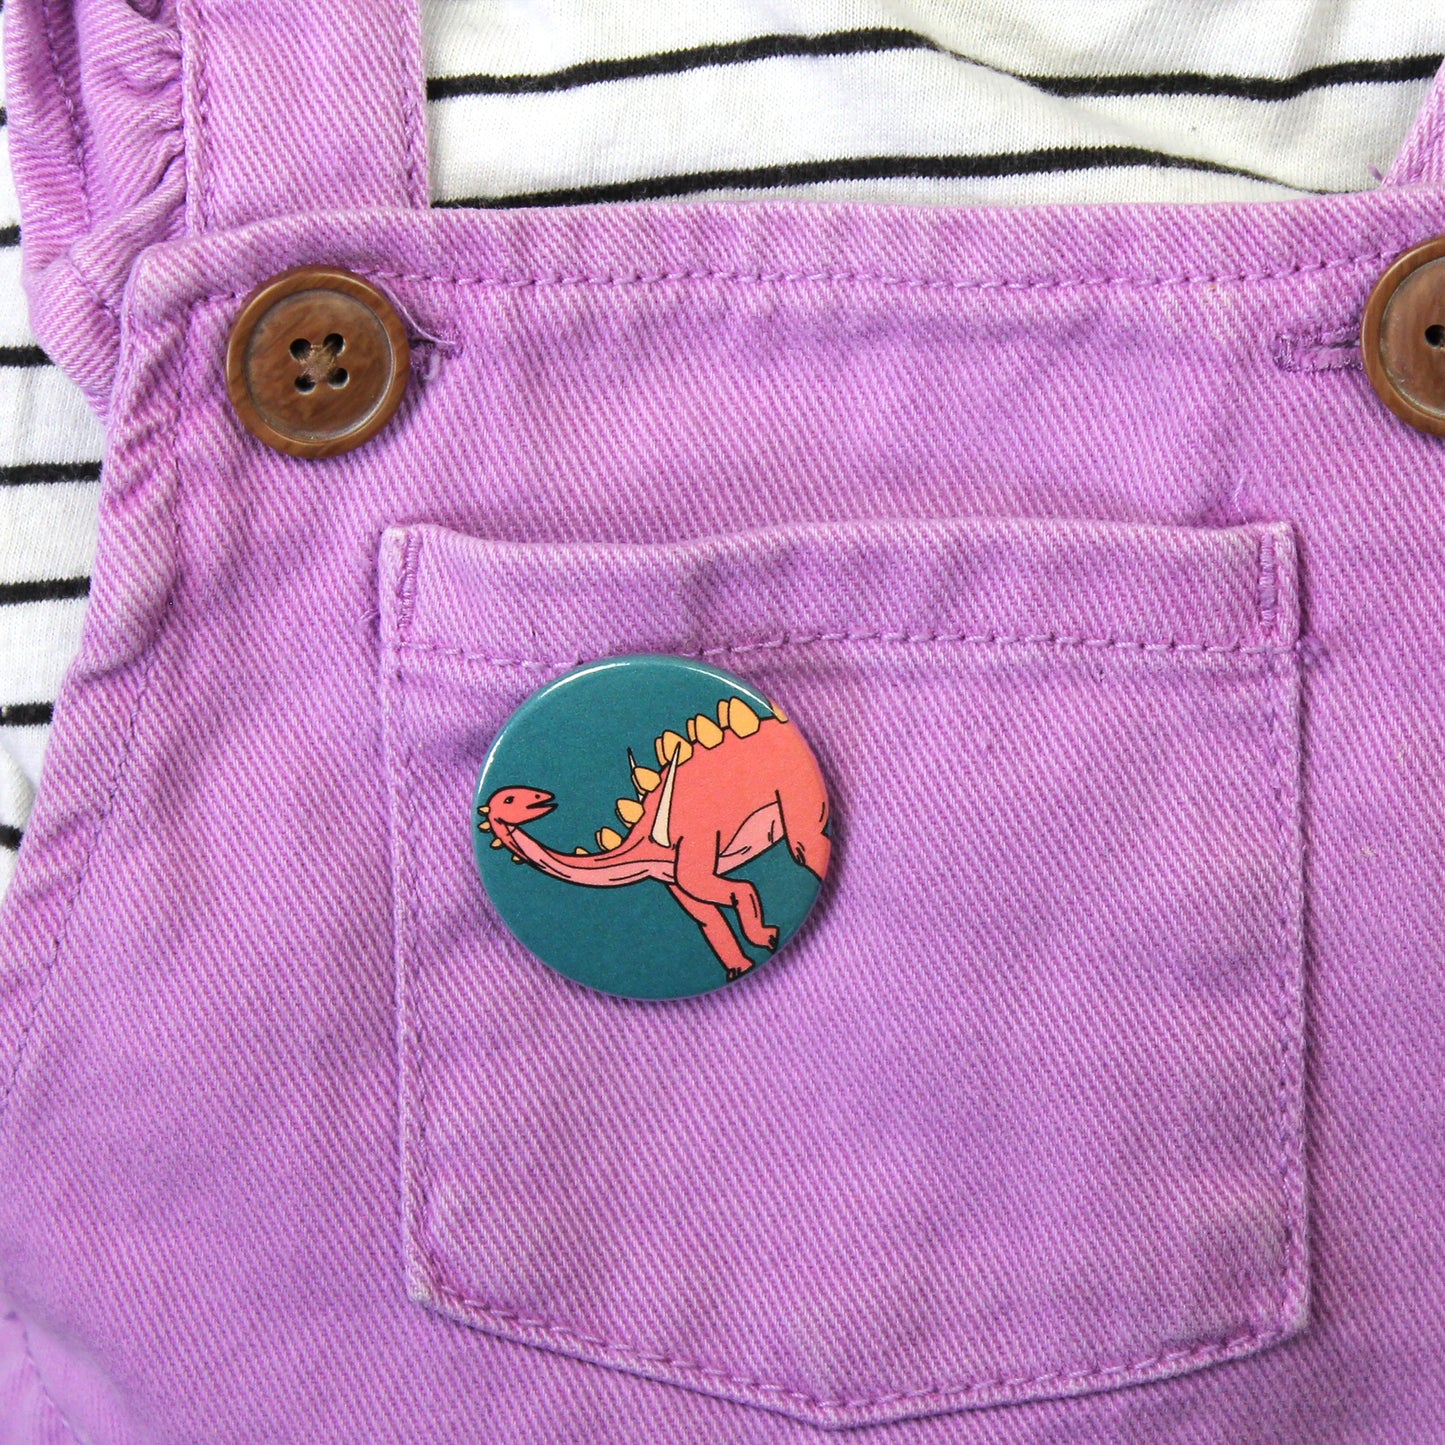 green Miragaia badge on a purple kids dungaree dress